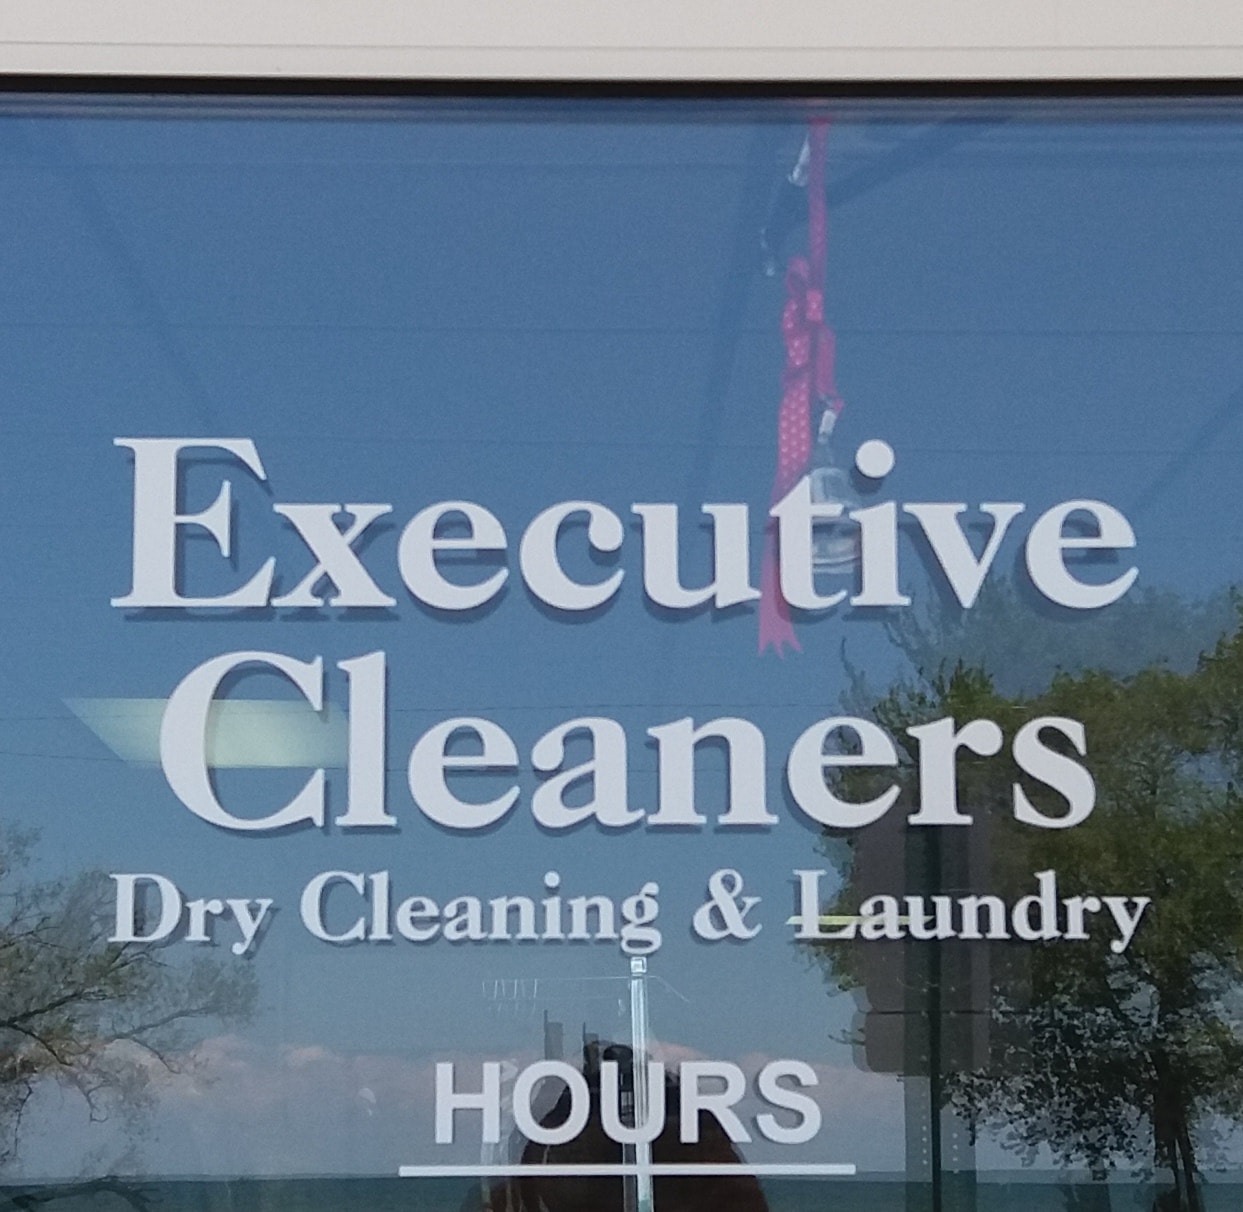 Executive Cleaners 1400 E Perry St, Port Clinton Ohio 43452